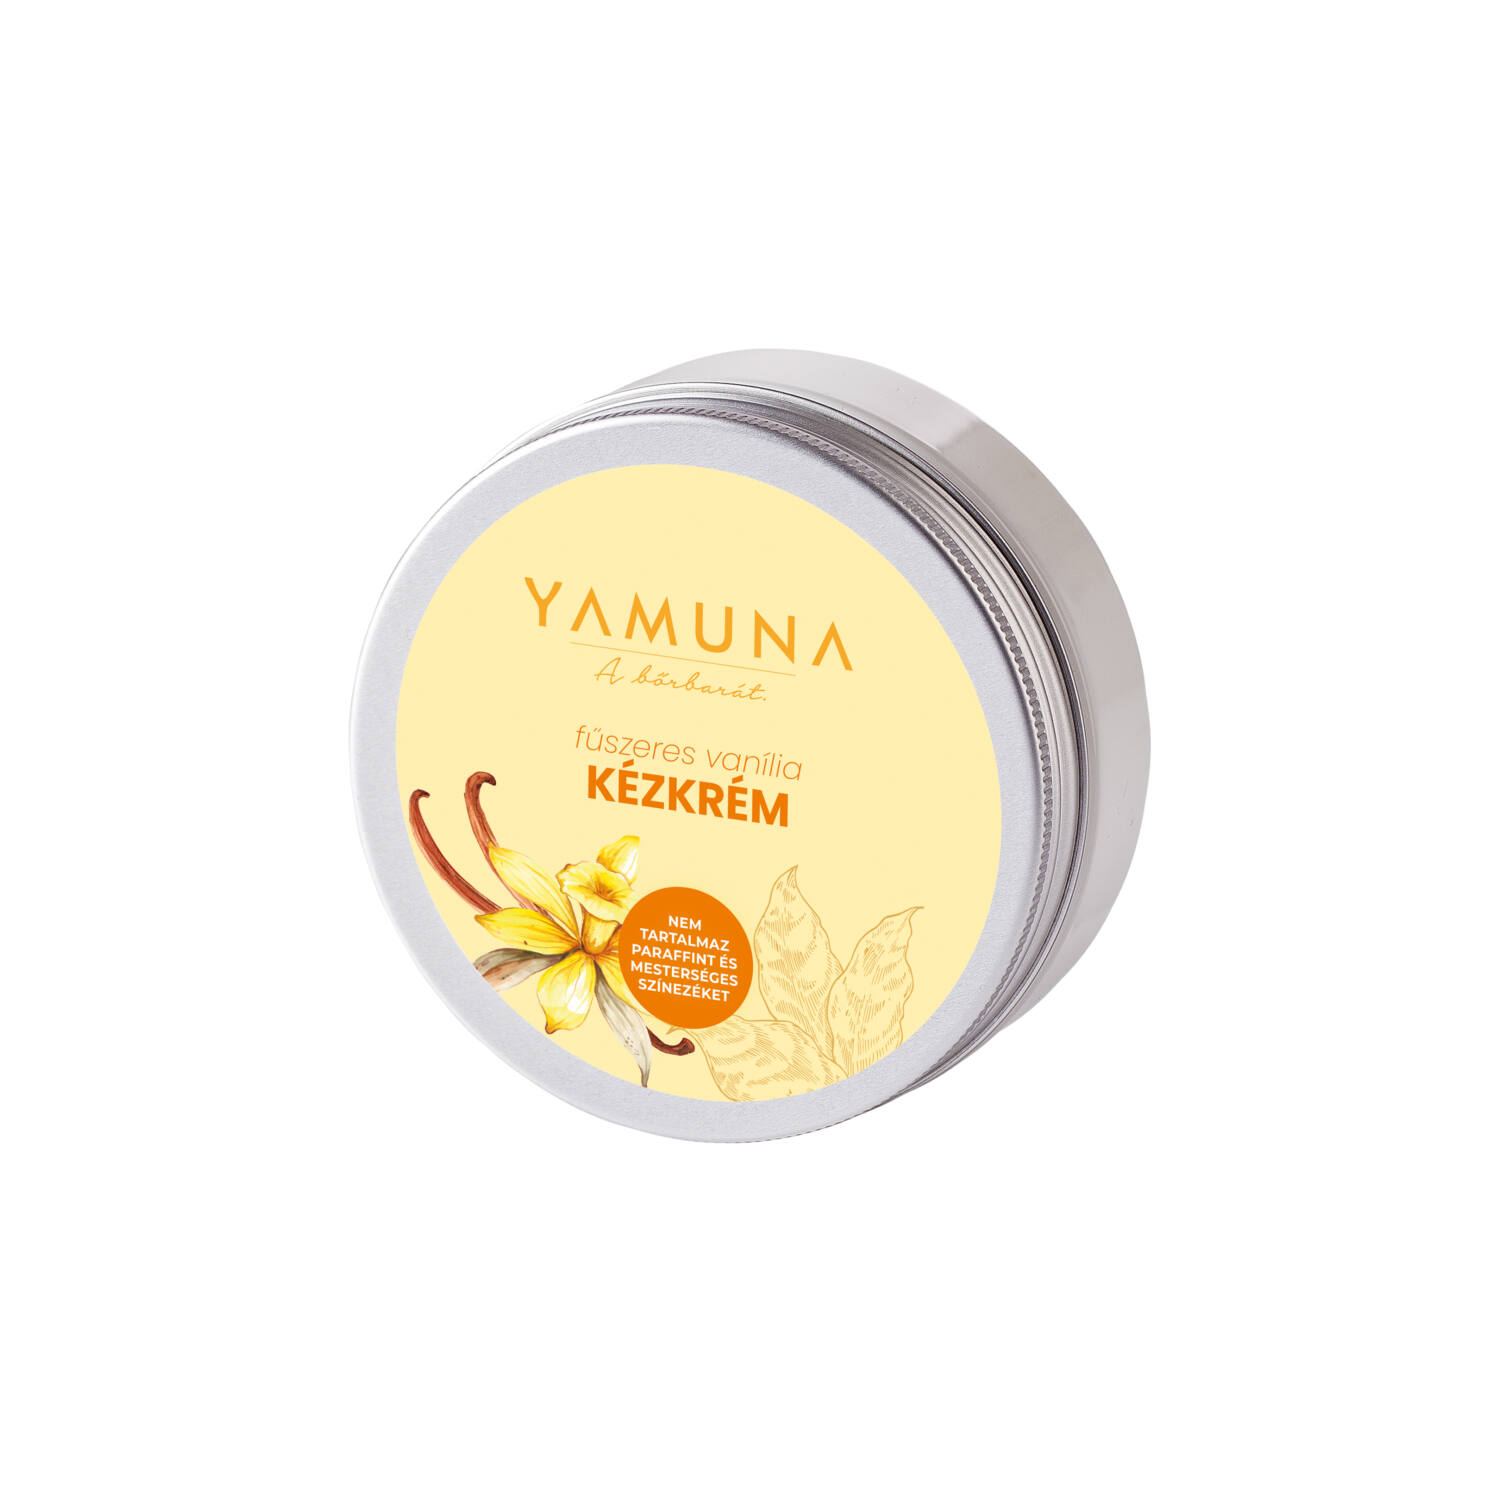 crema maini vanilie yamuna romania happy tour fuszeres vanilia kezkrem 50ml